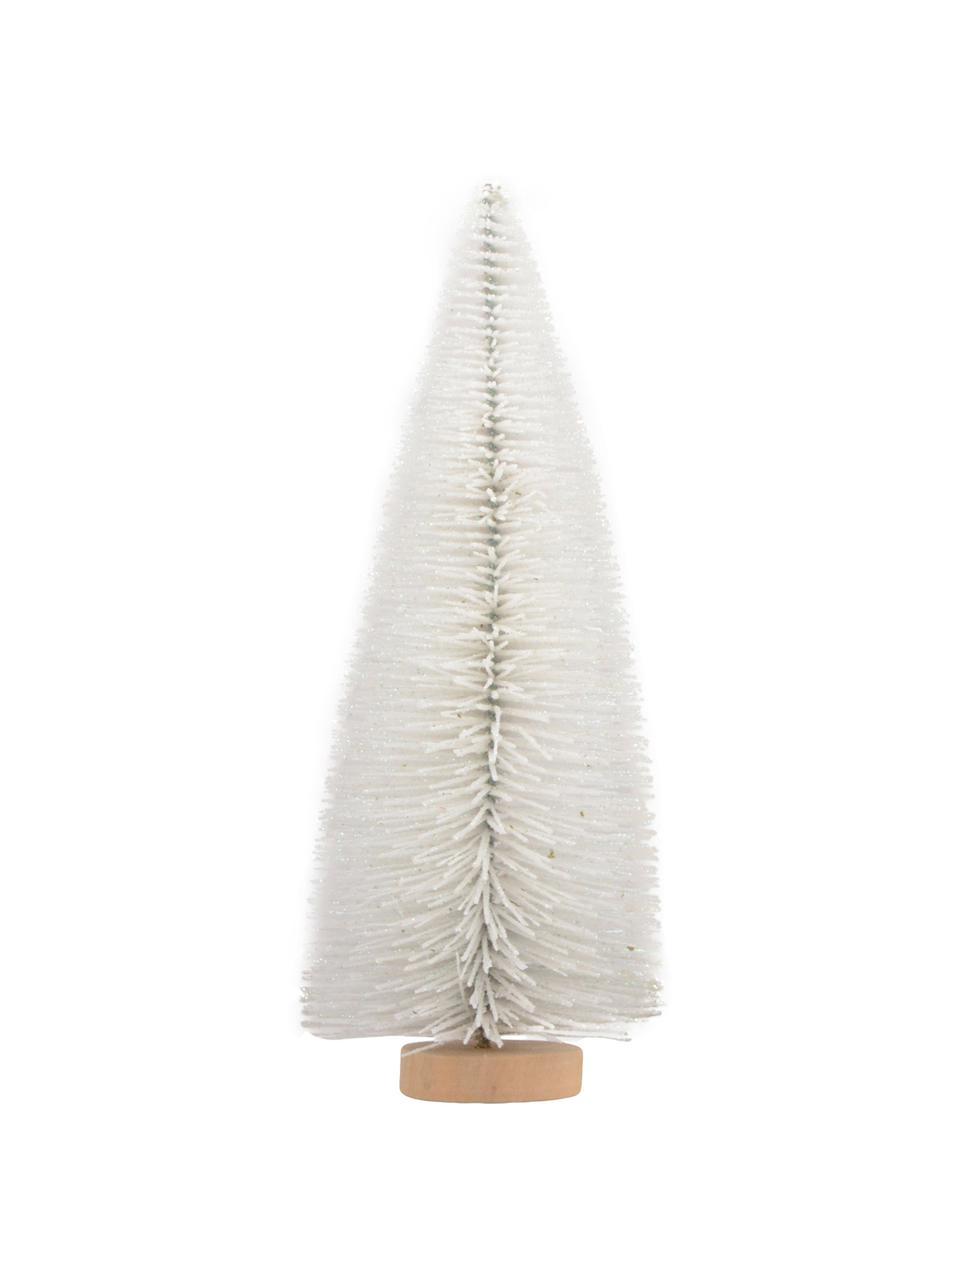 Objet décoratif Christmas Tree, Blanc, brun clair